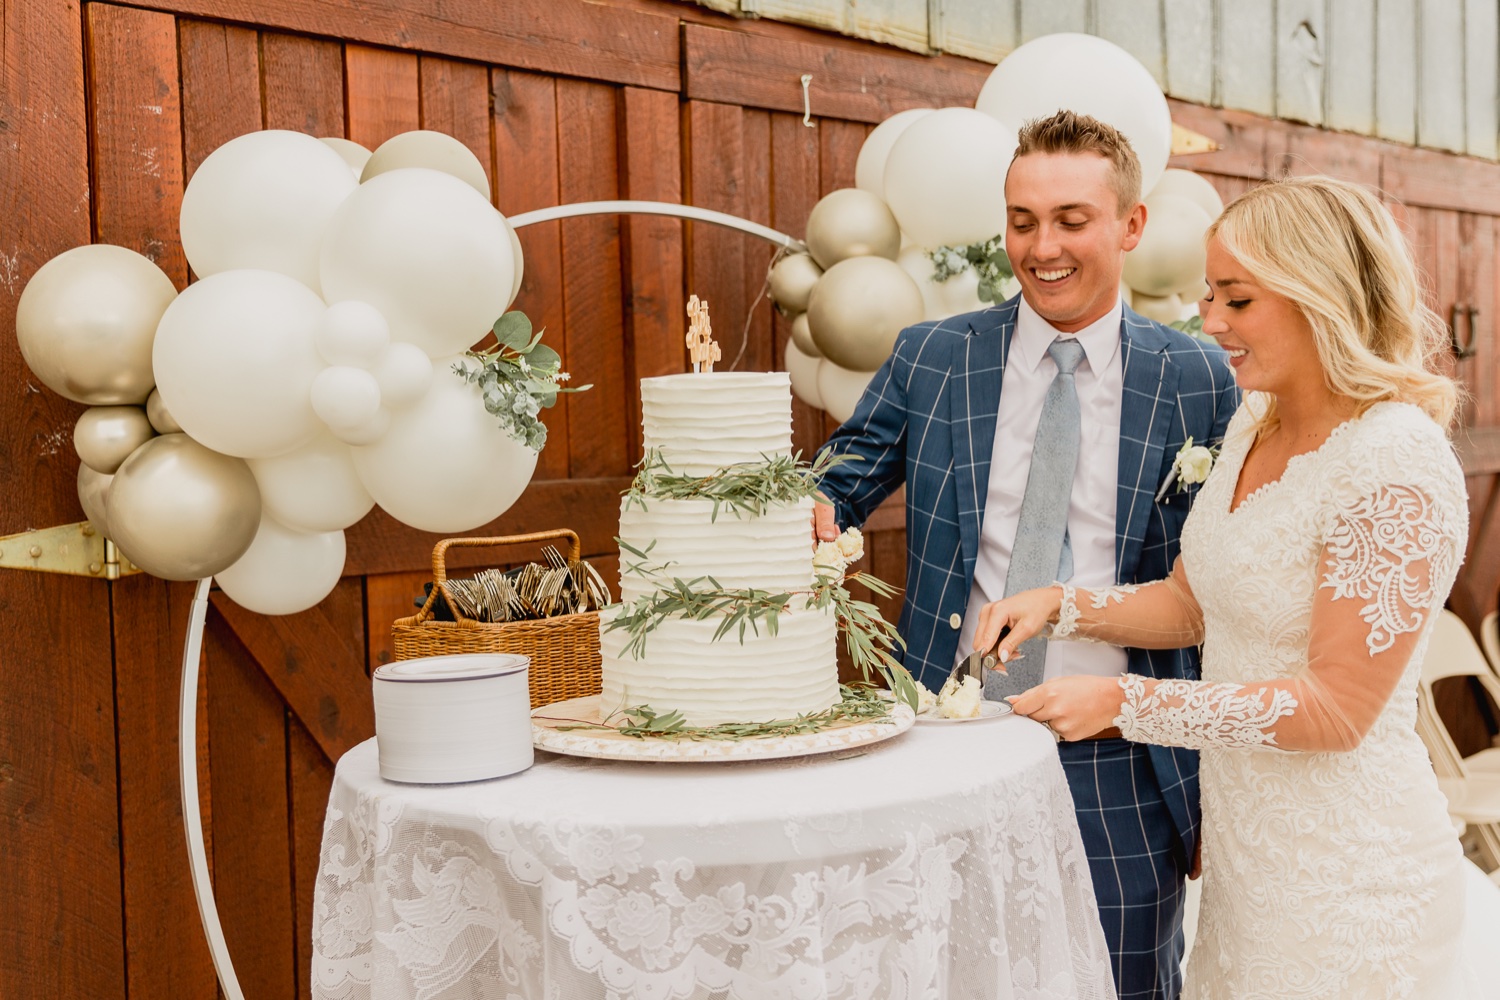 https://fetch.getnarrativeapp.com/static/27fa3395-1981-439c-9189-3604e4130165/Bride-and-groom-smiling-as-they-cut-a-slice-of-their-wedding-cake,-captured-by-Robin-Kunzler-Photo.jpg?w=1500